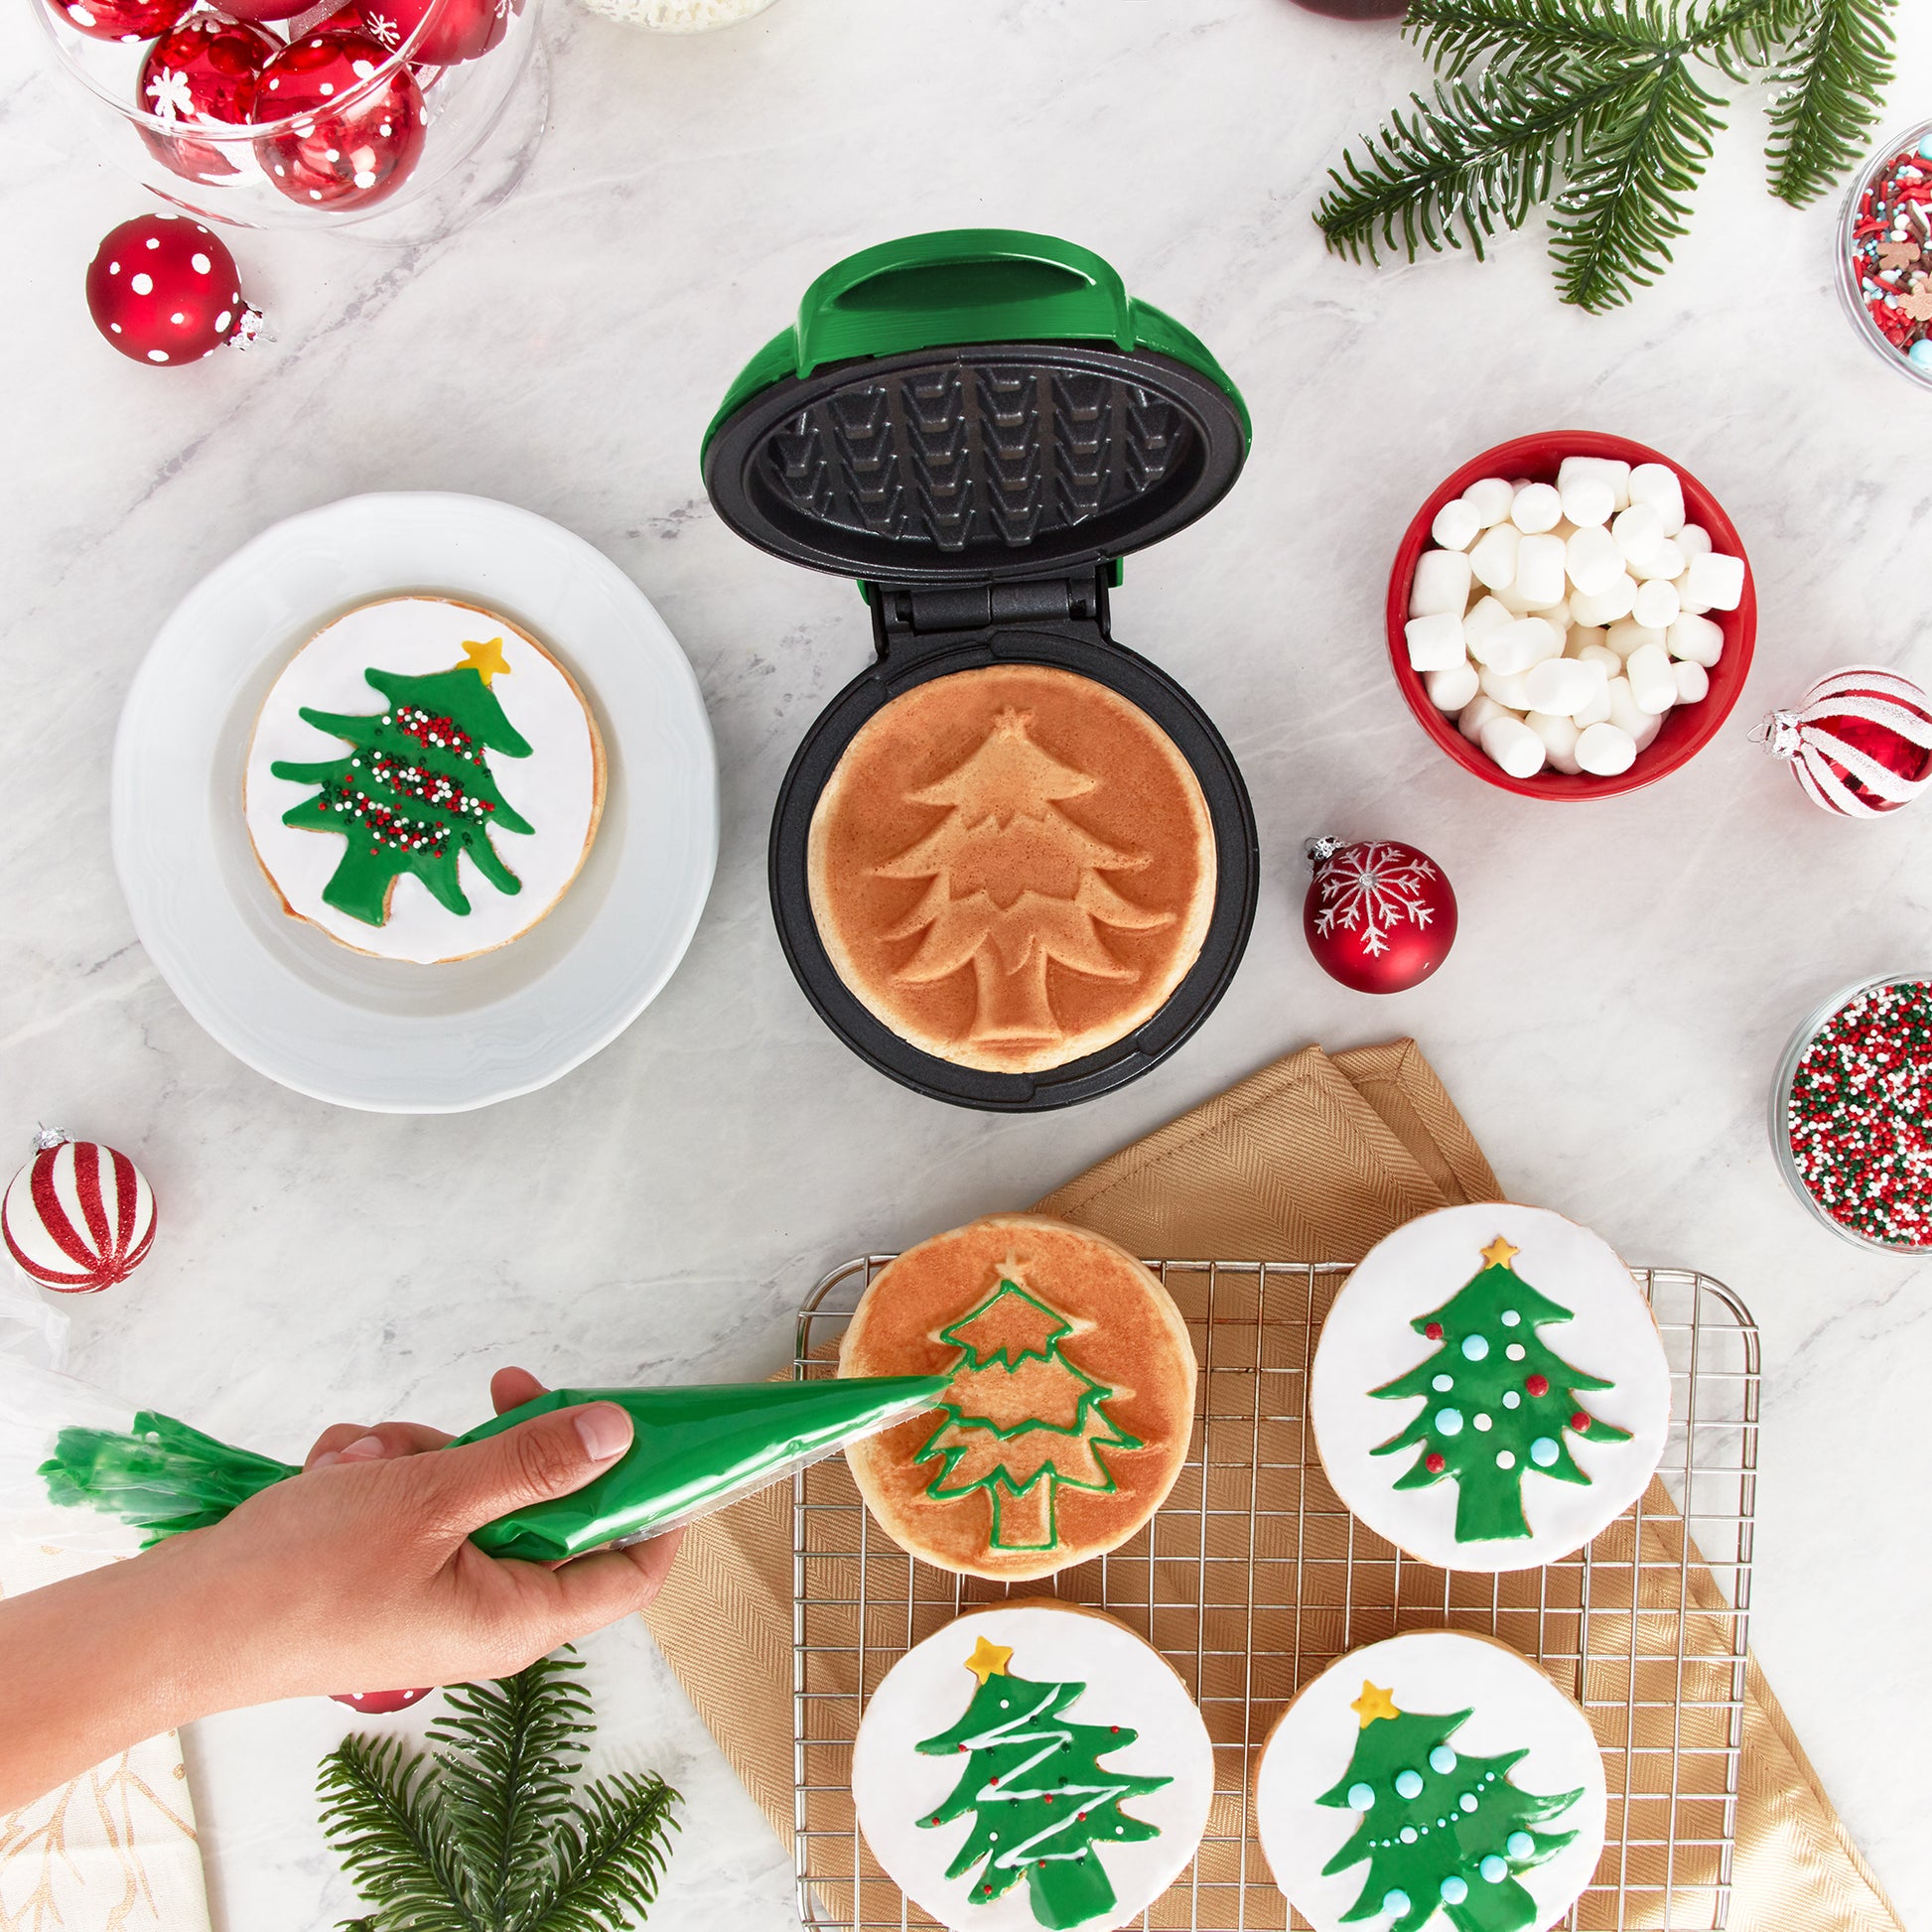 Christmas Tree Mini Waffle Maker – Dash